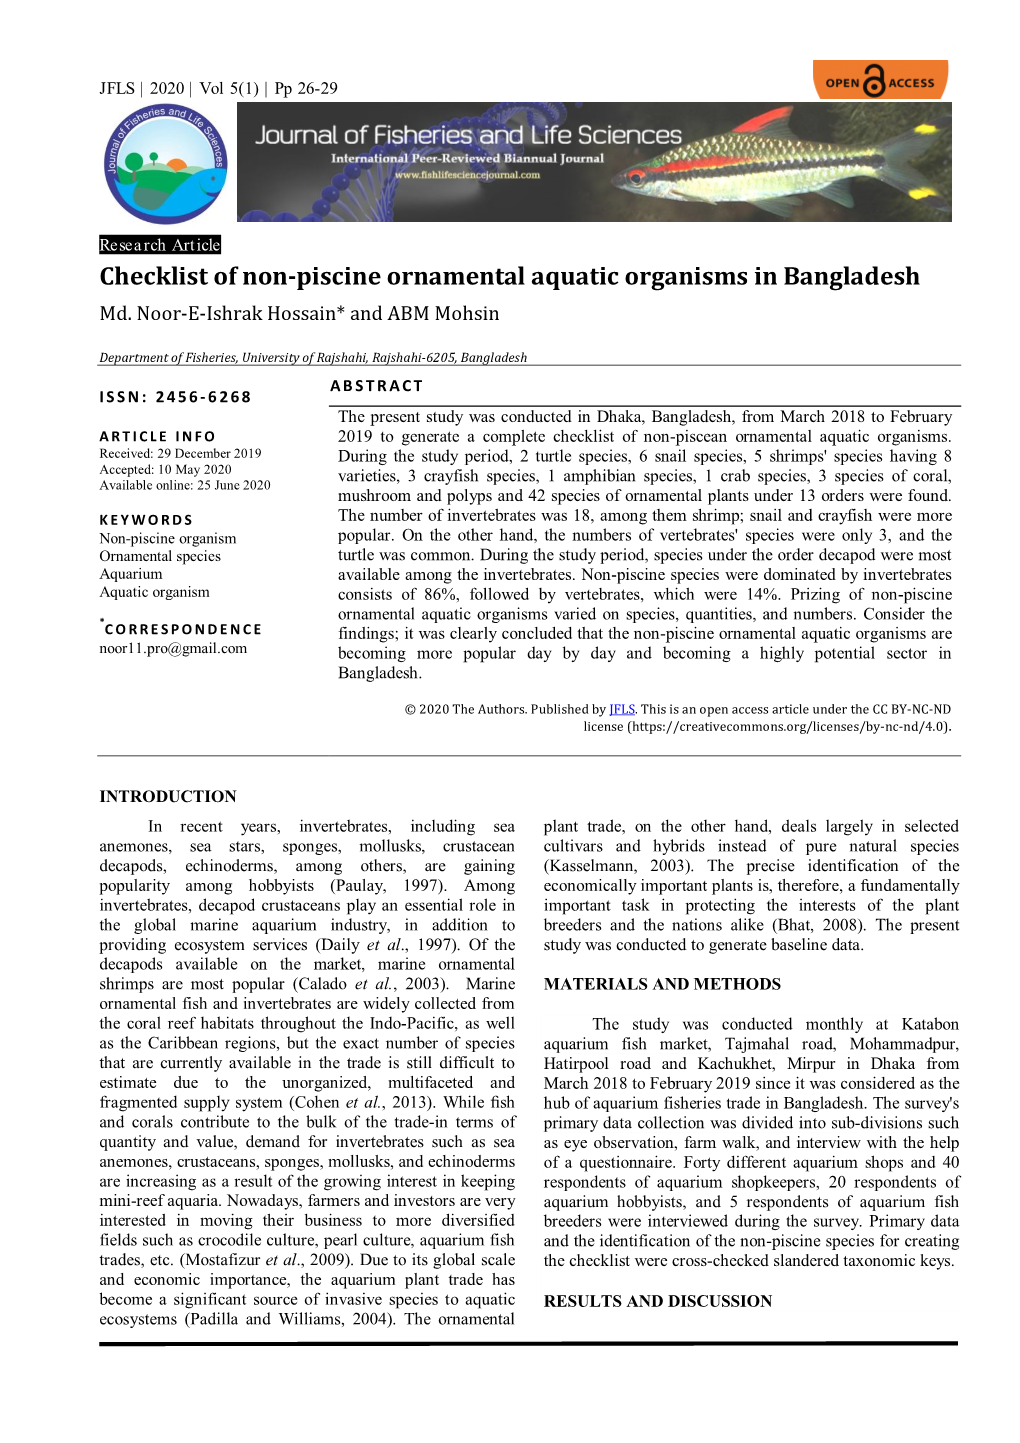 Checklist of Non-Piscine Ornamental Aquatic Organisms in Bangladesh Md